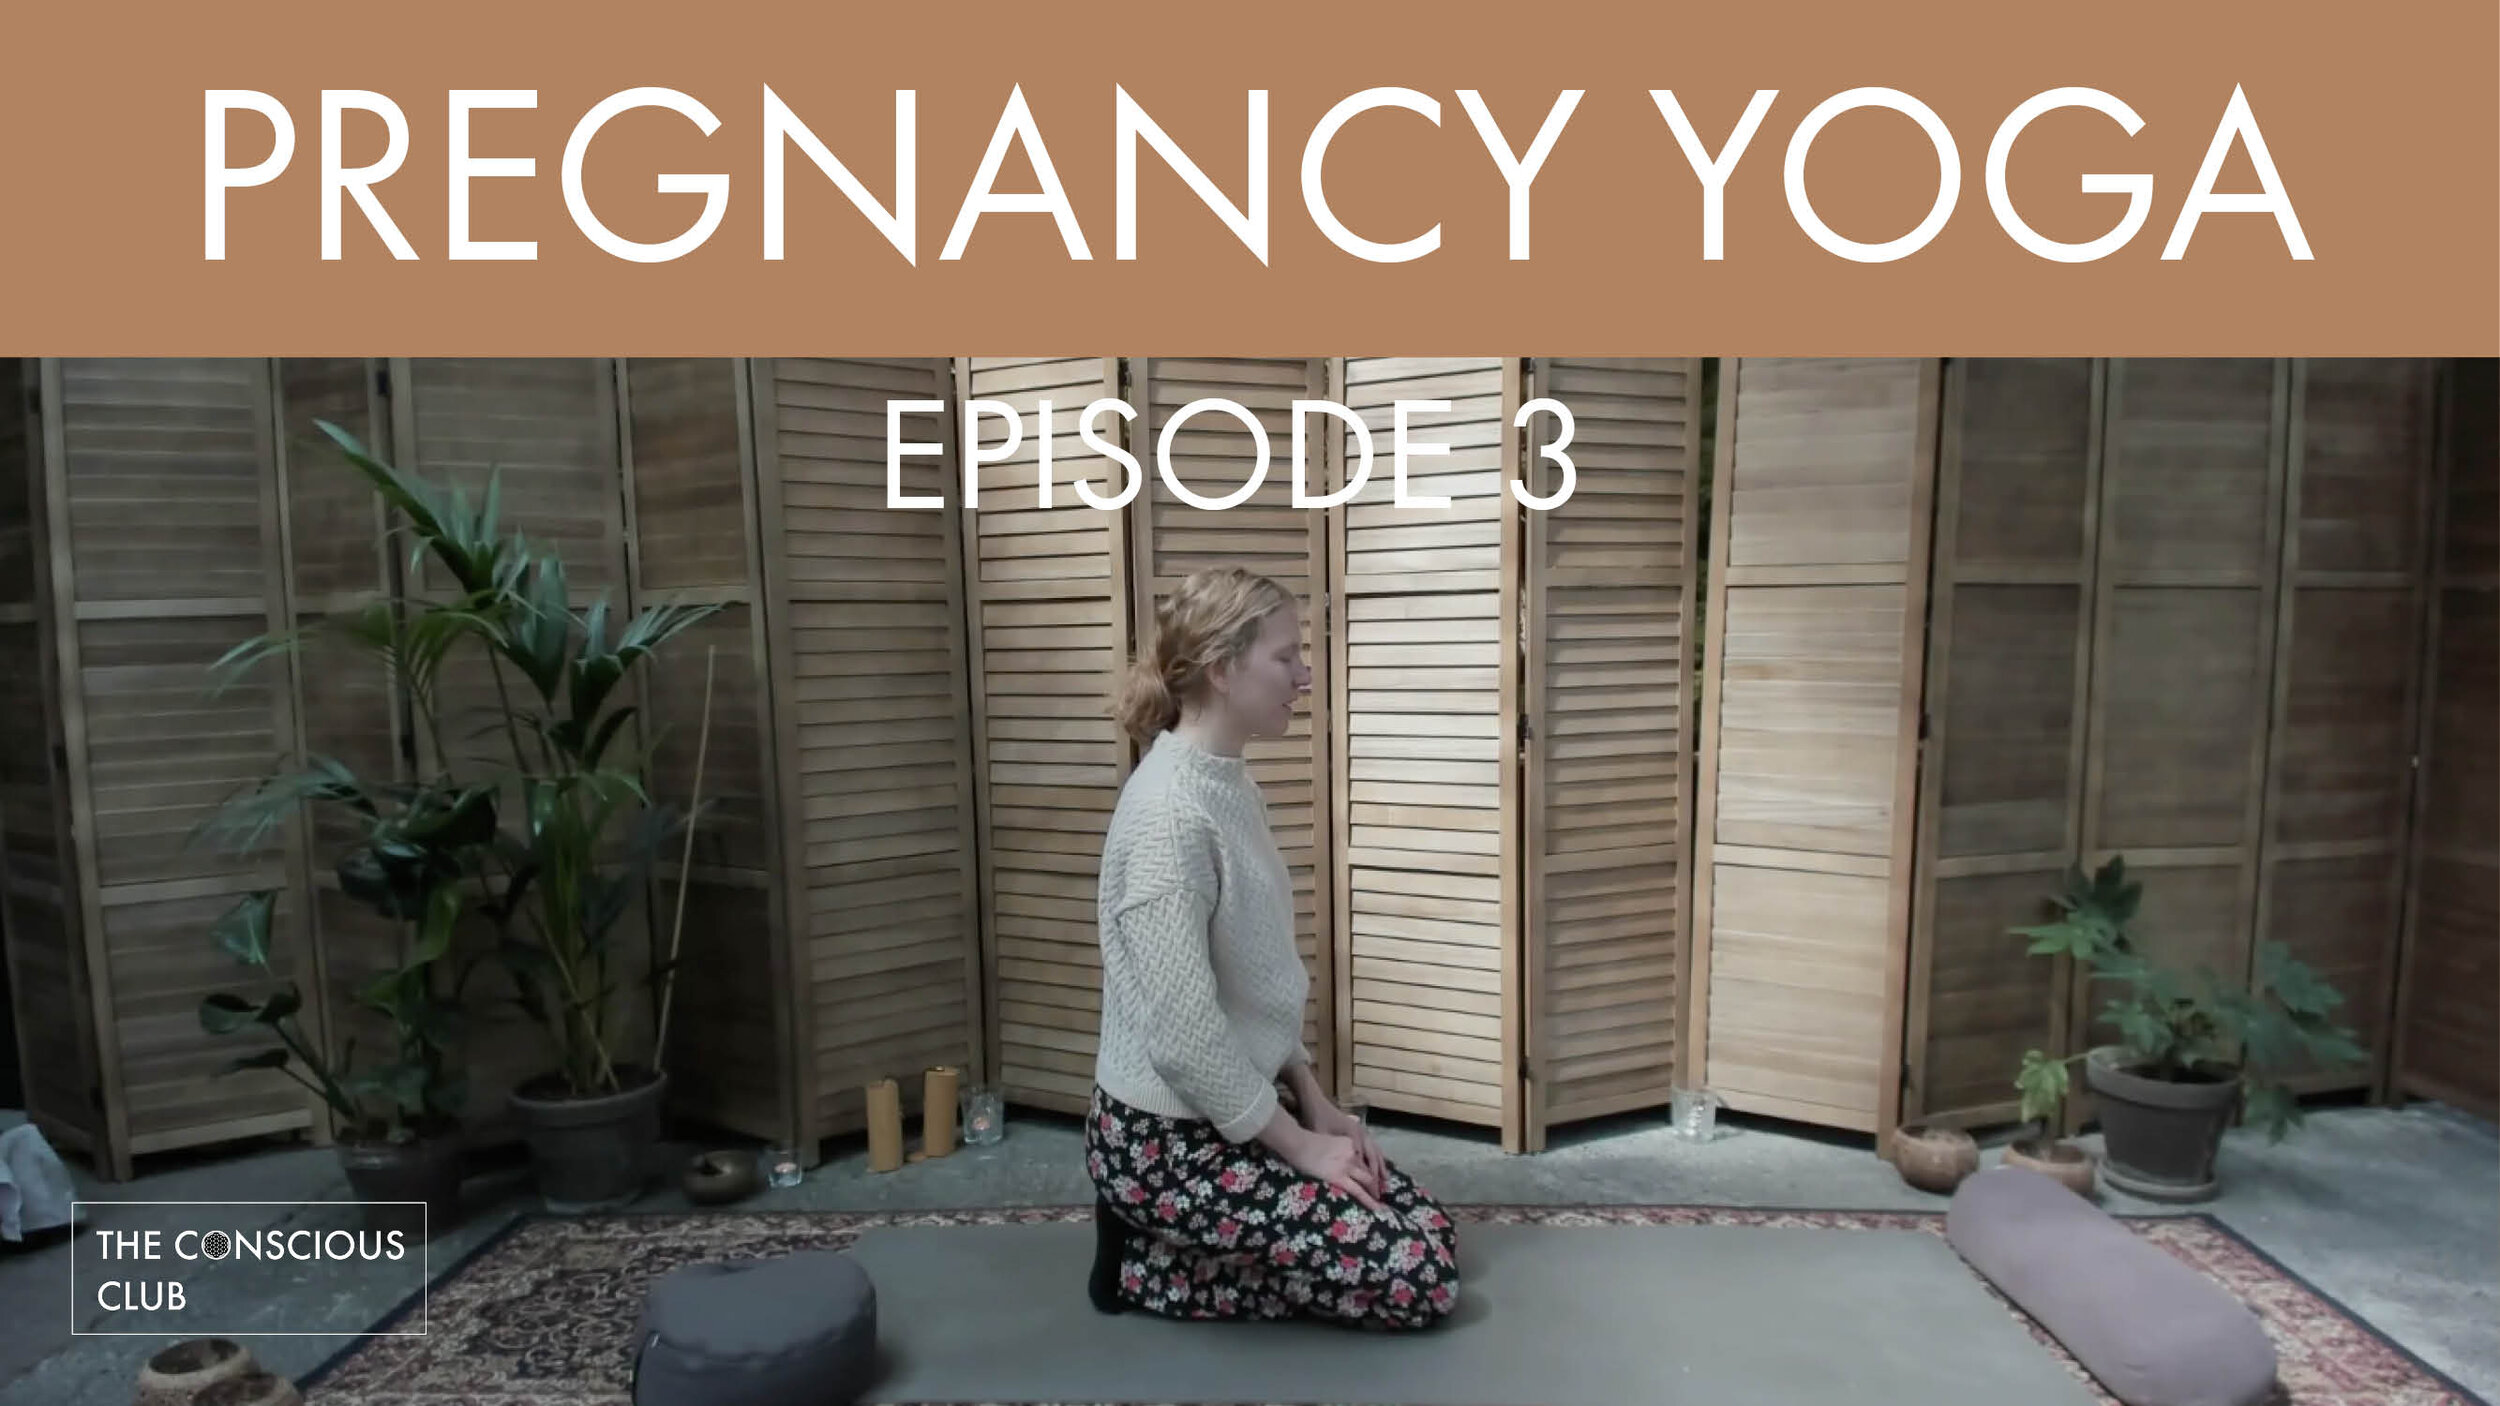 pregnancy yoga - episode 3.jpg